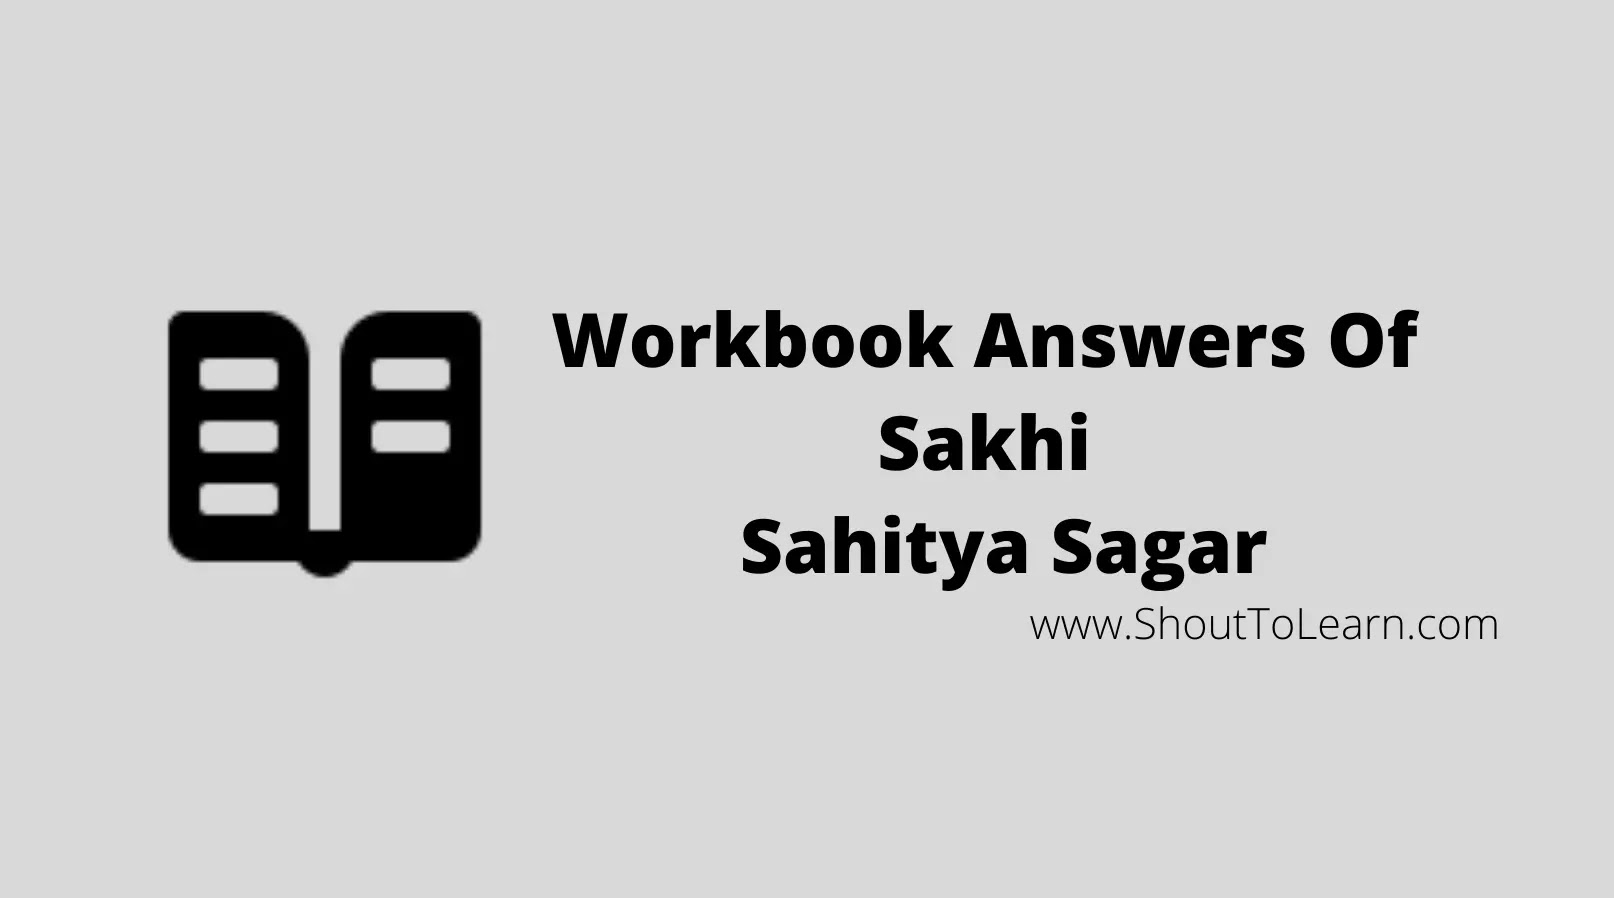 Workbook Answers of Sakhi - Sahitya Sagar